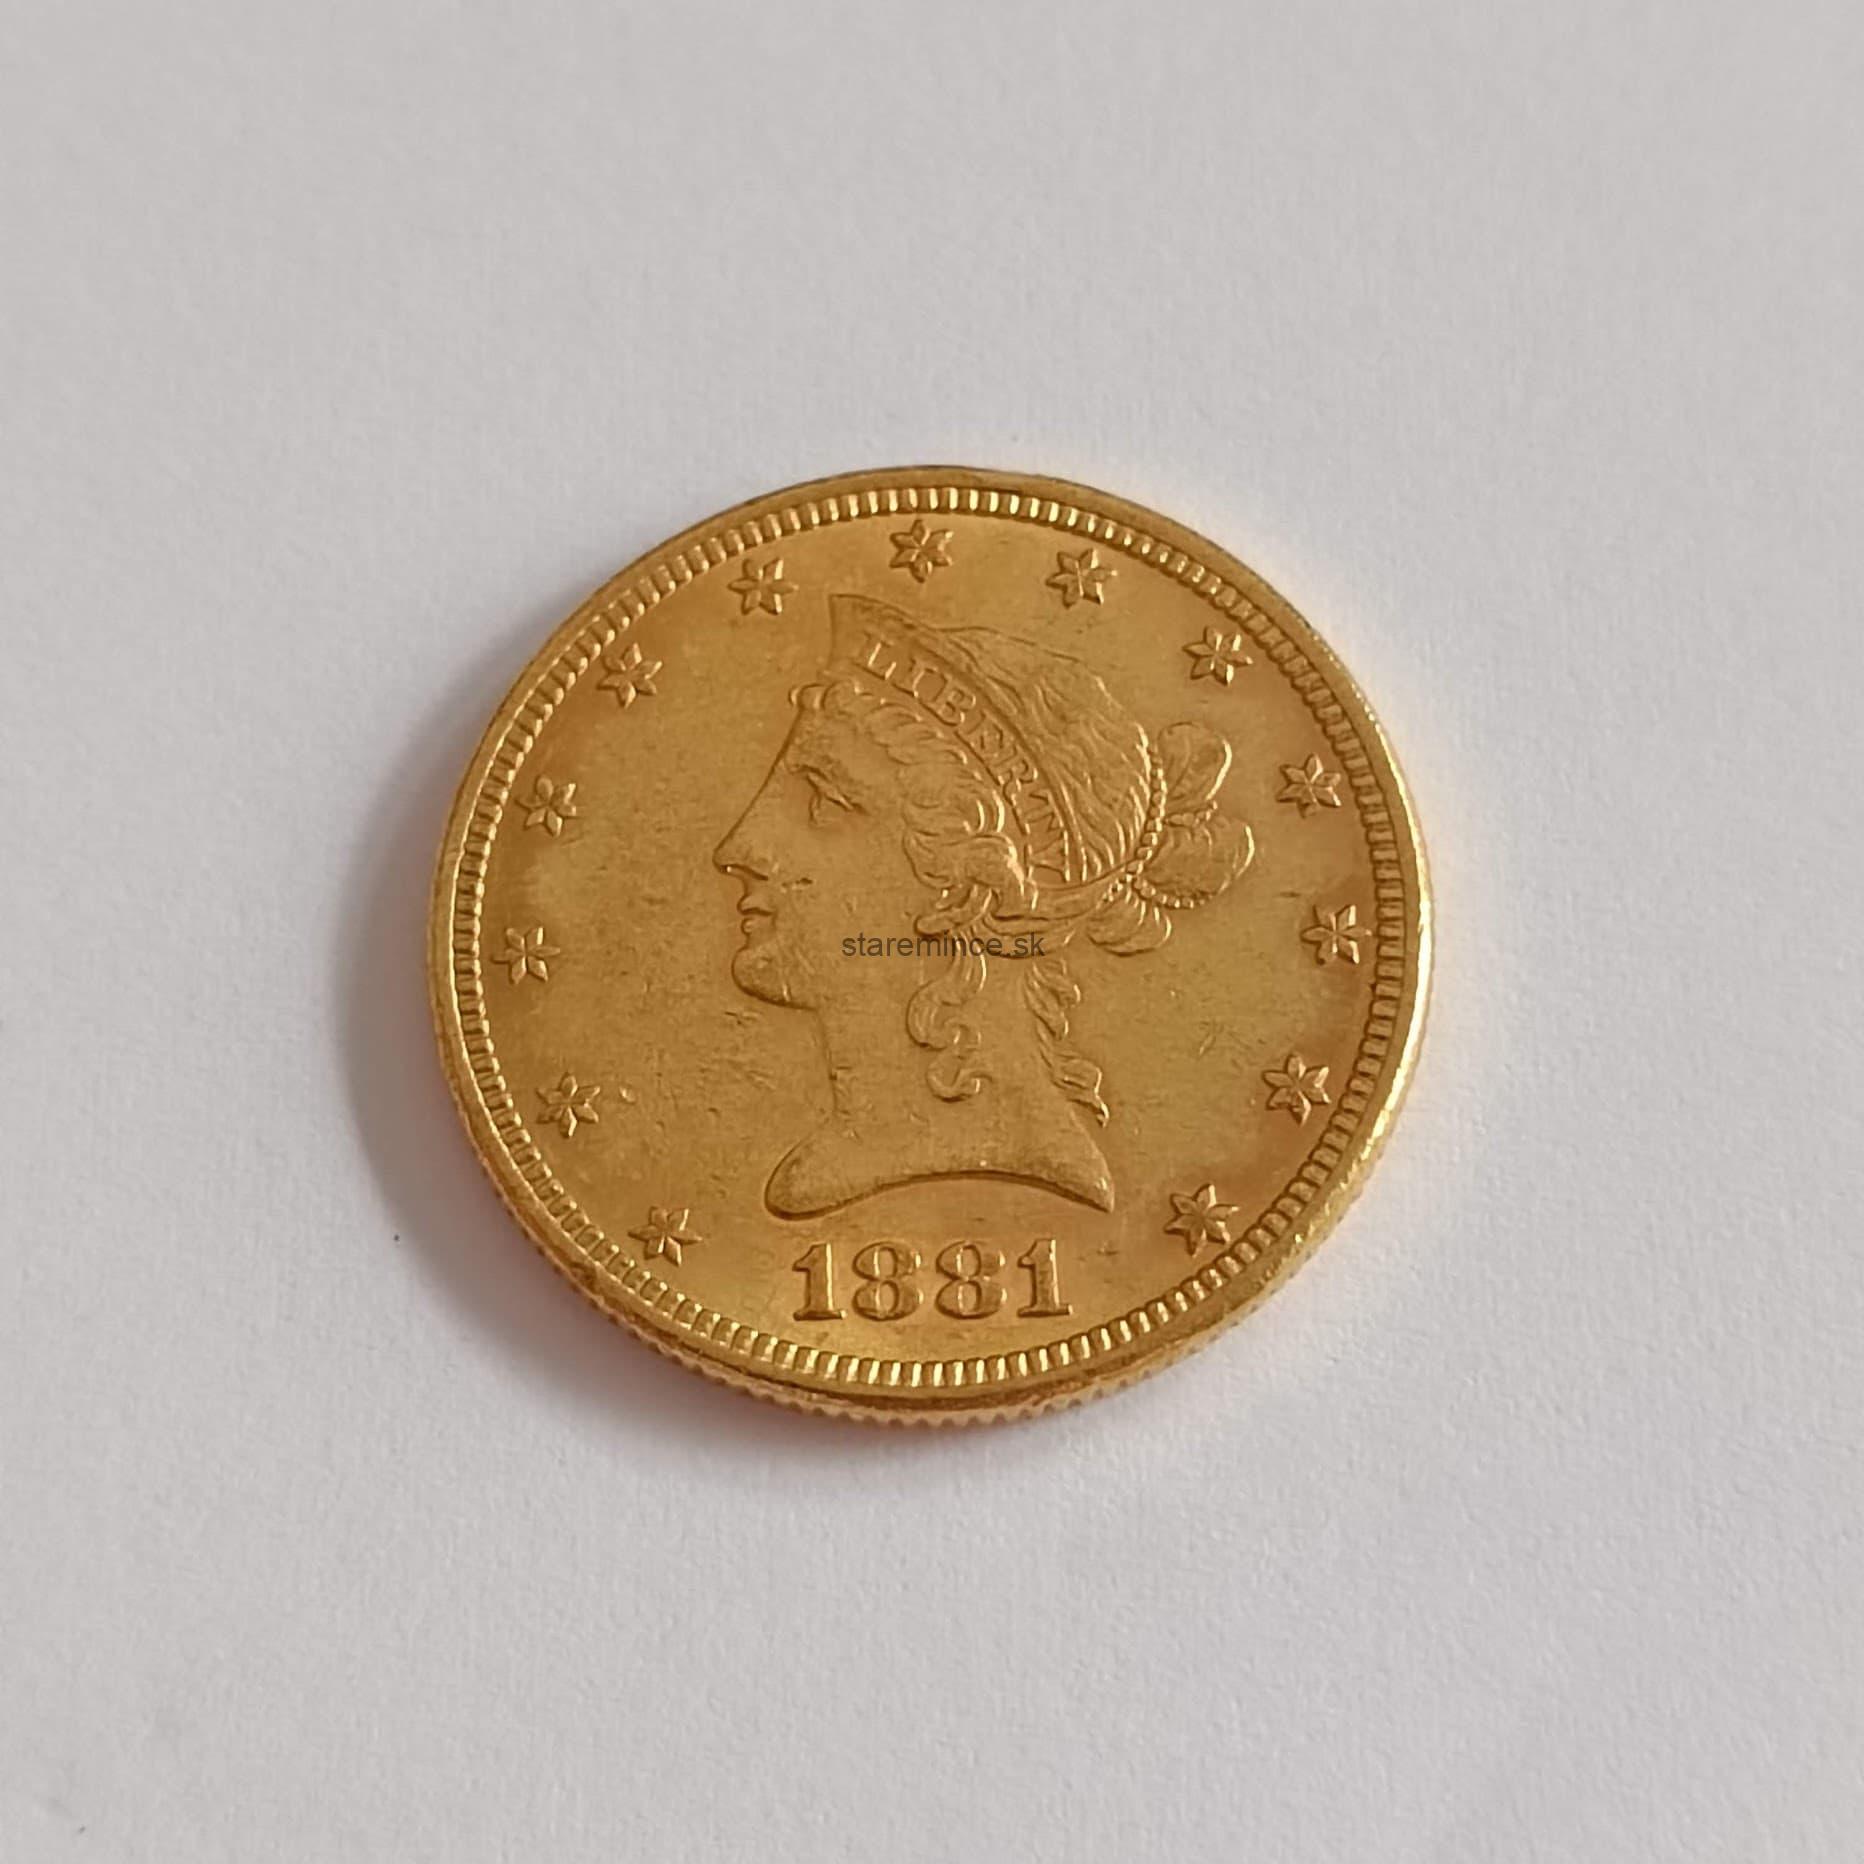  $10 1881 Liberty